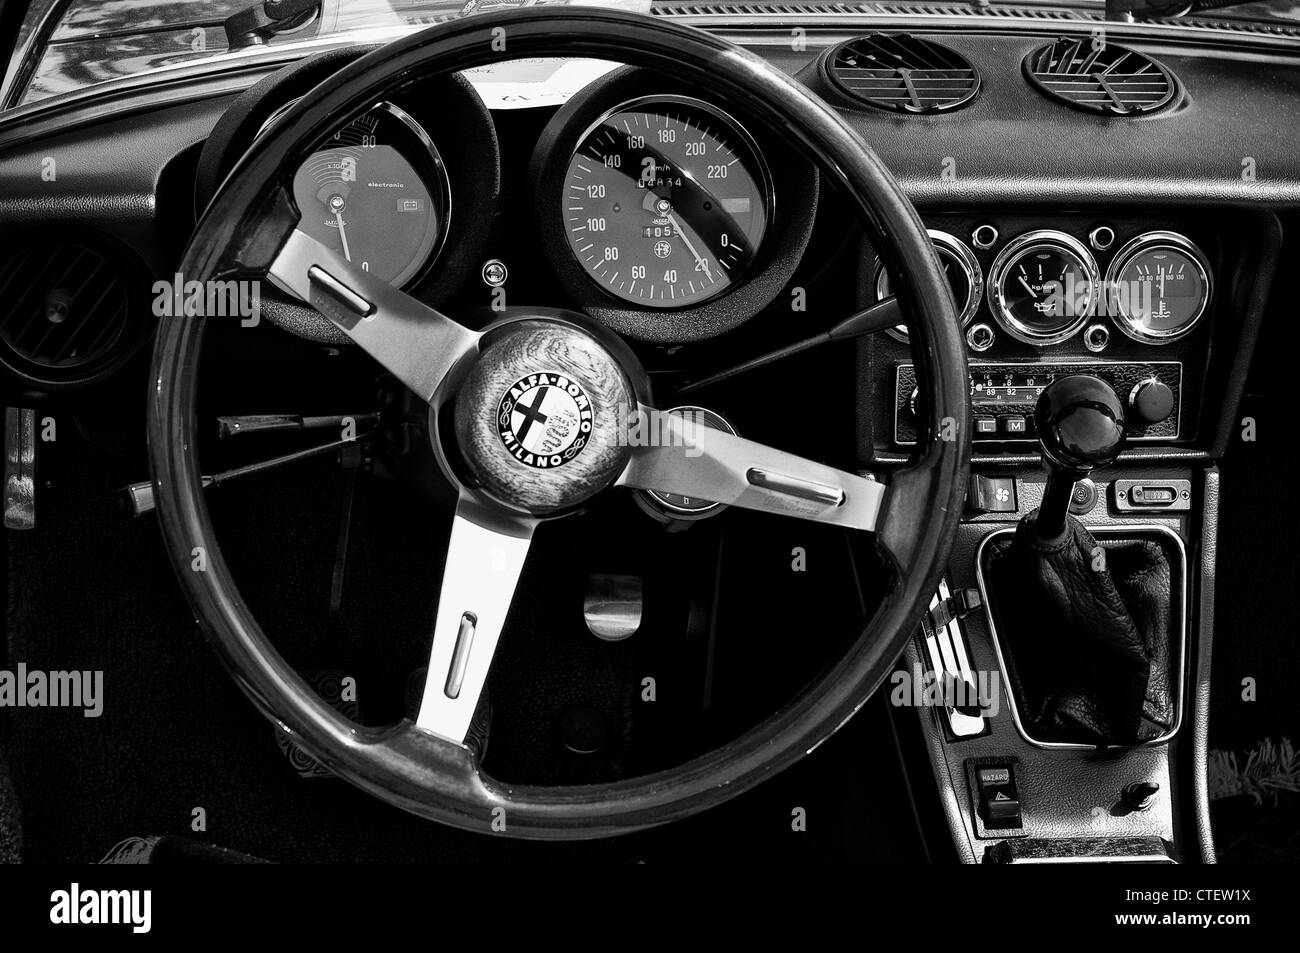 Cab Alfa Romeo (Black and White) Stock Photo